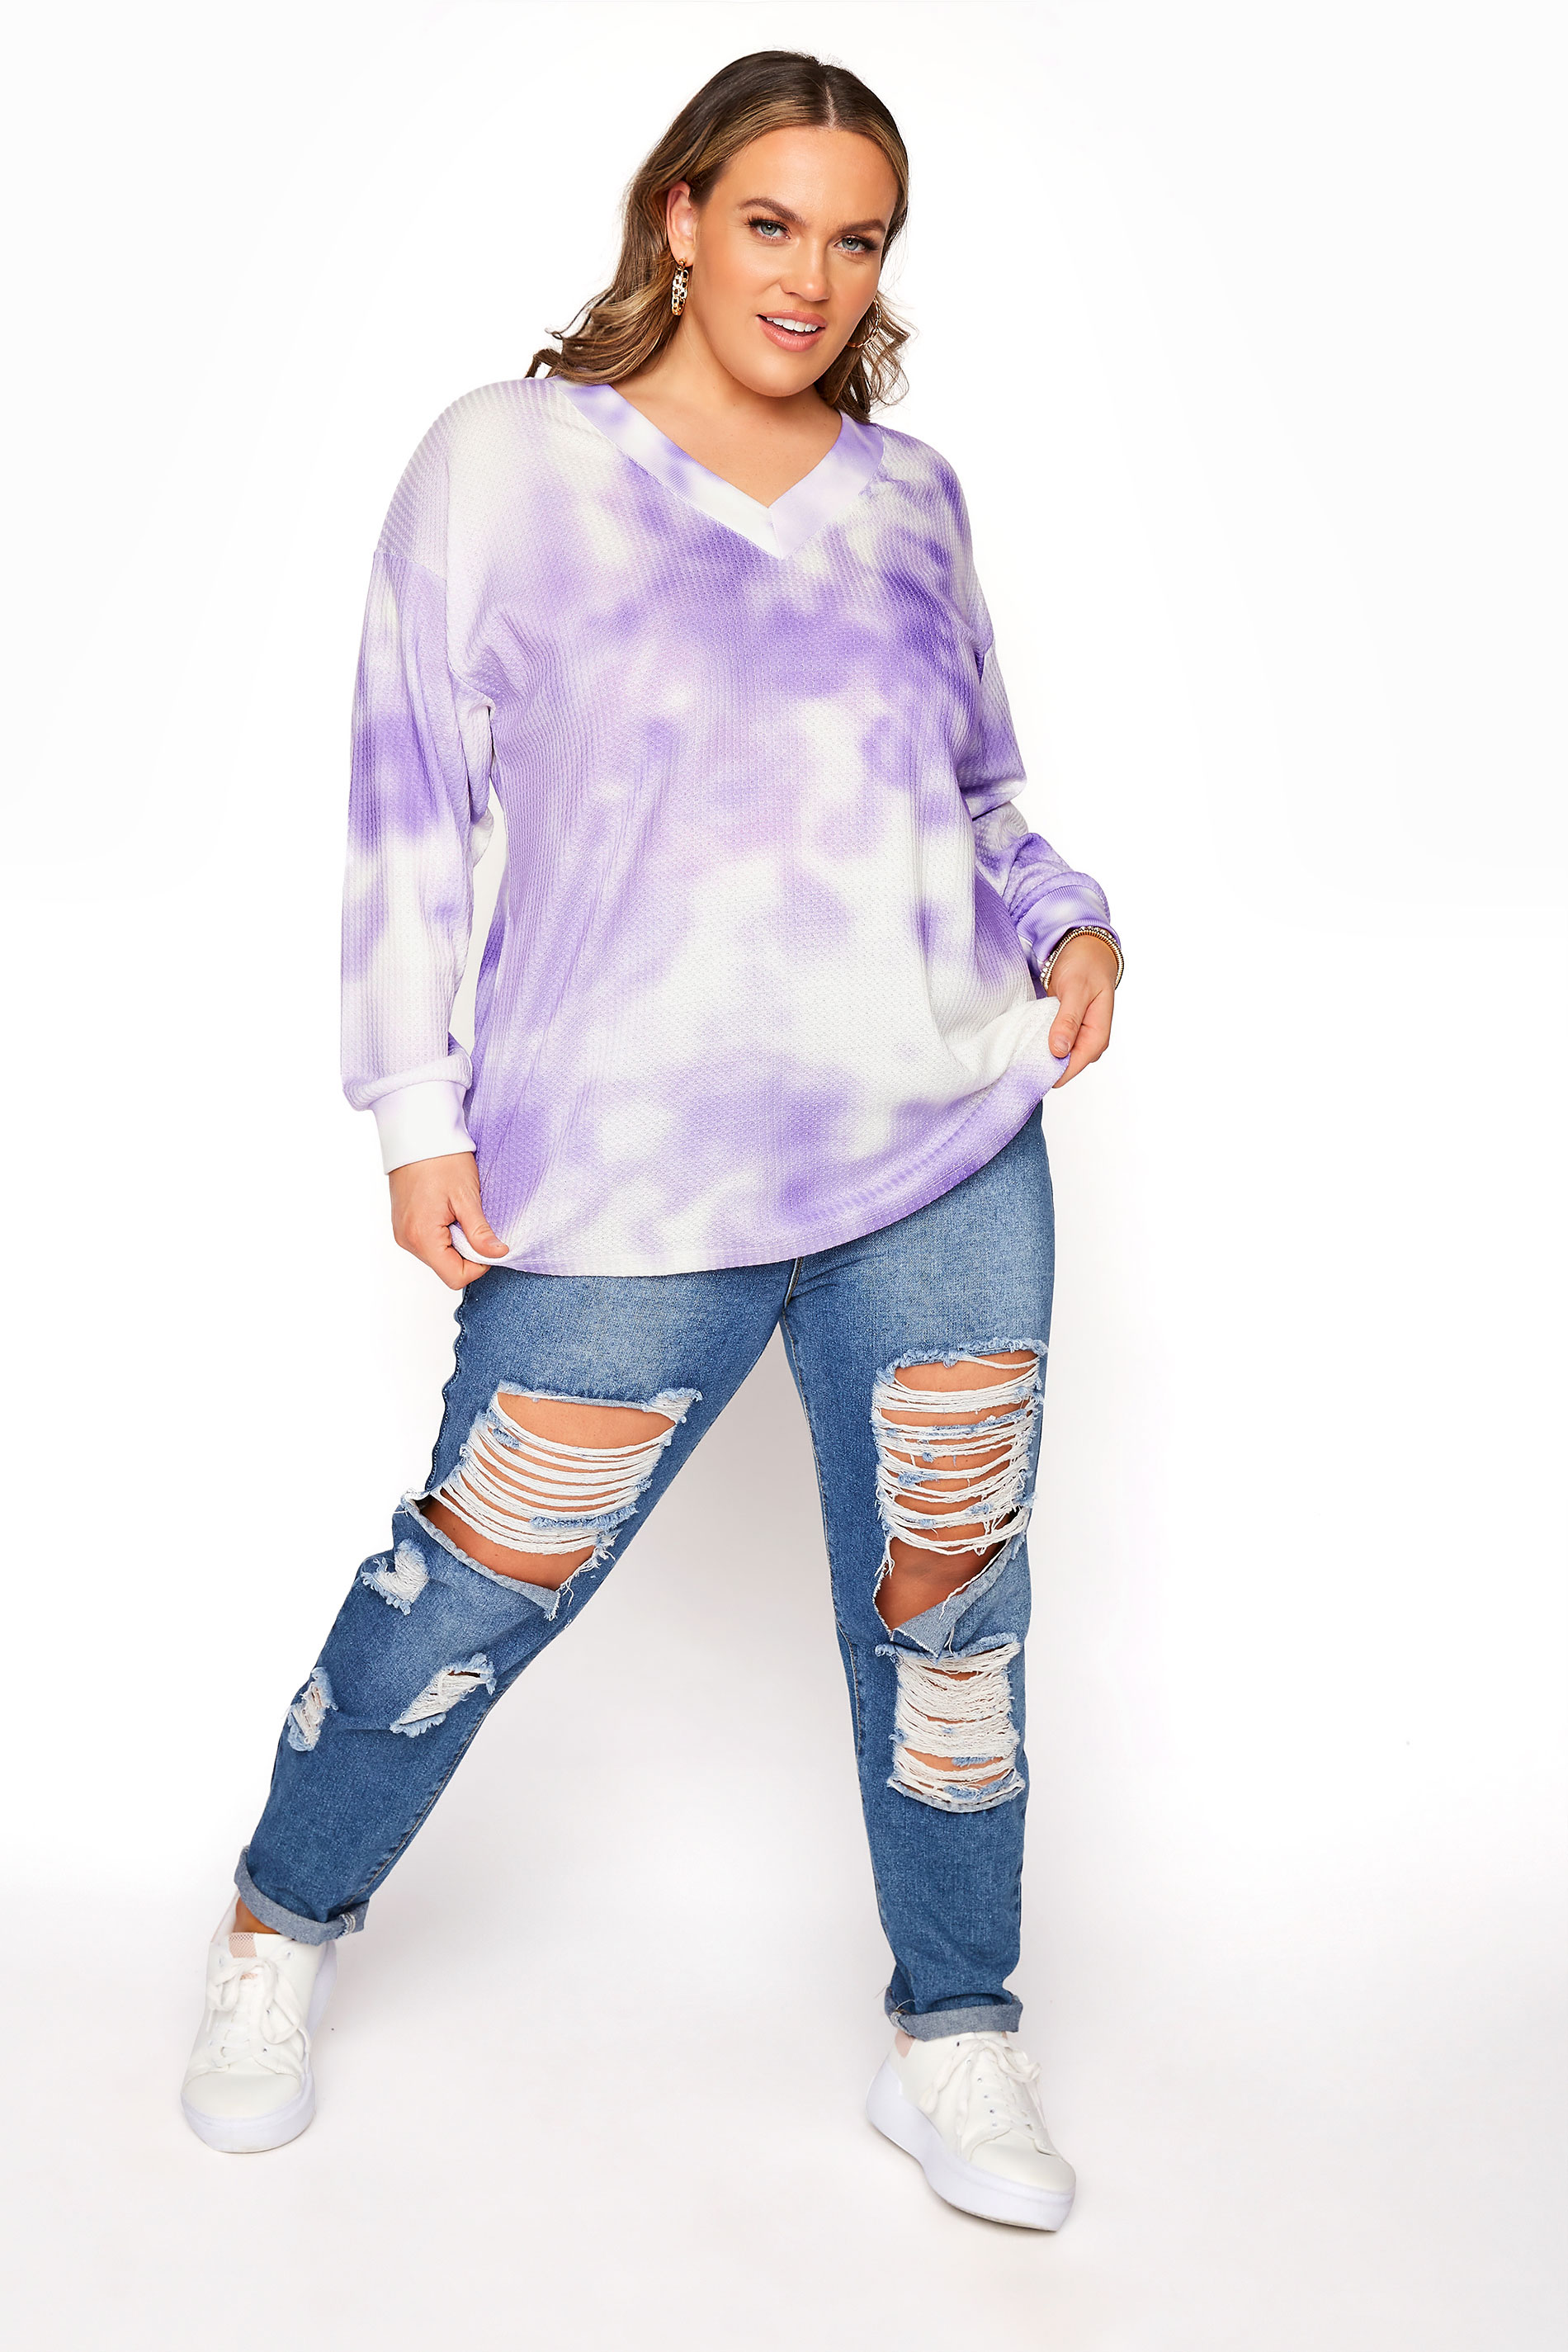 Grande taille  Tops Grande taille  Sweatshirts & Pulls à Capuche | Sweatshirt Encolure en V Violet Tie & Dye - XK26803